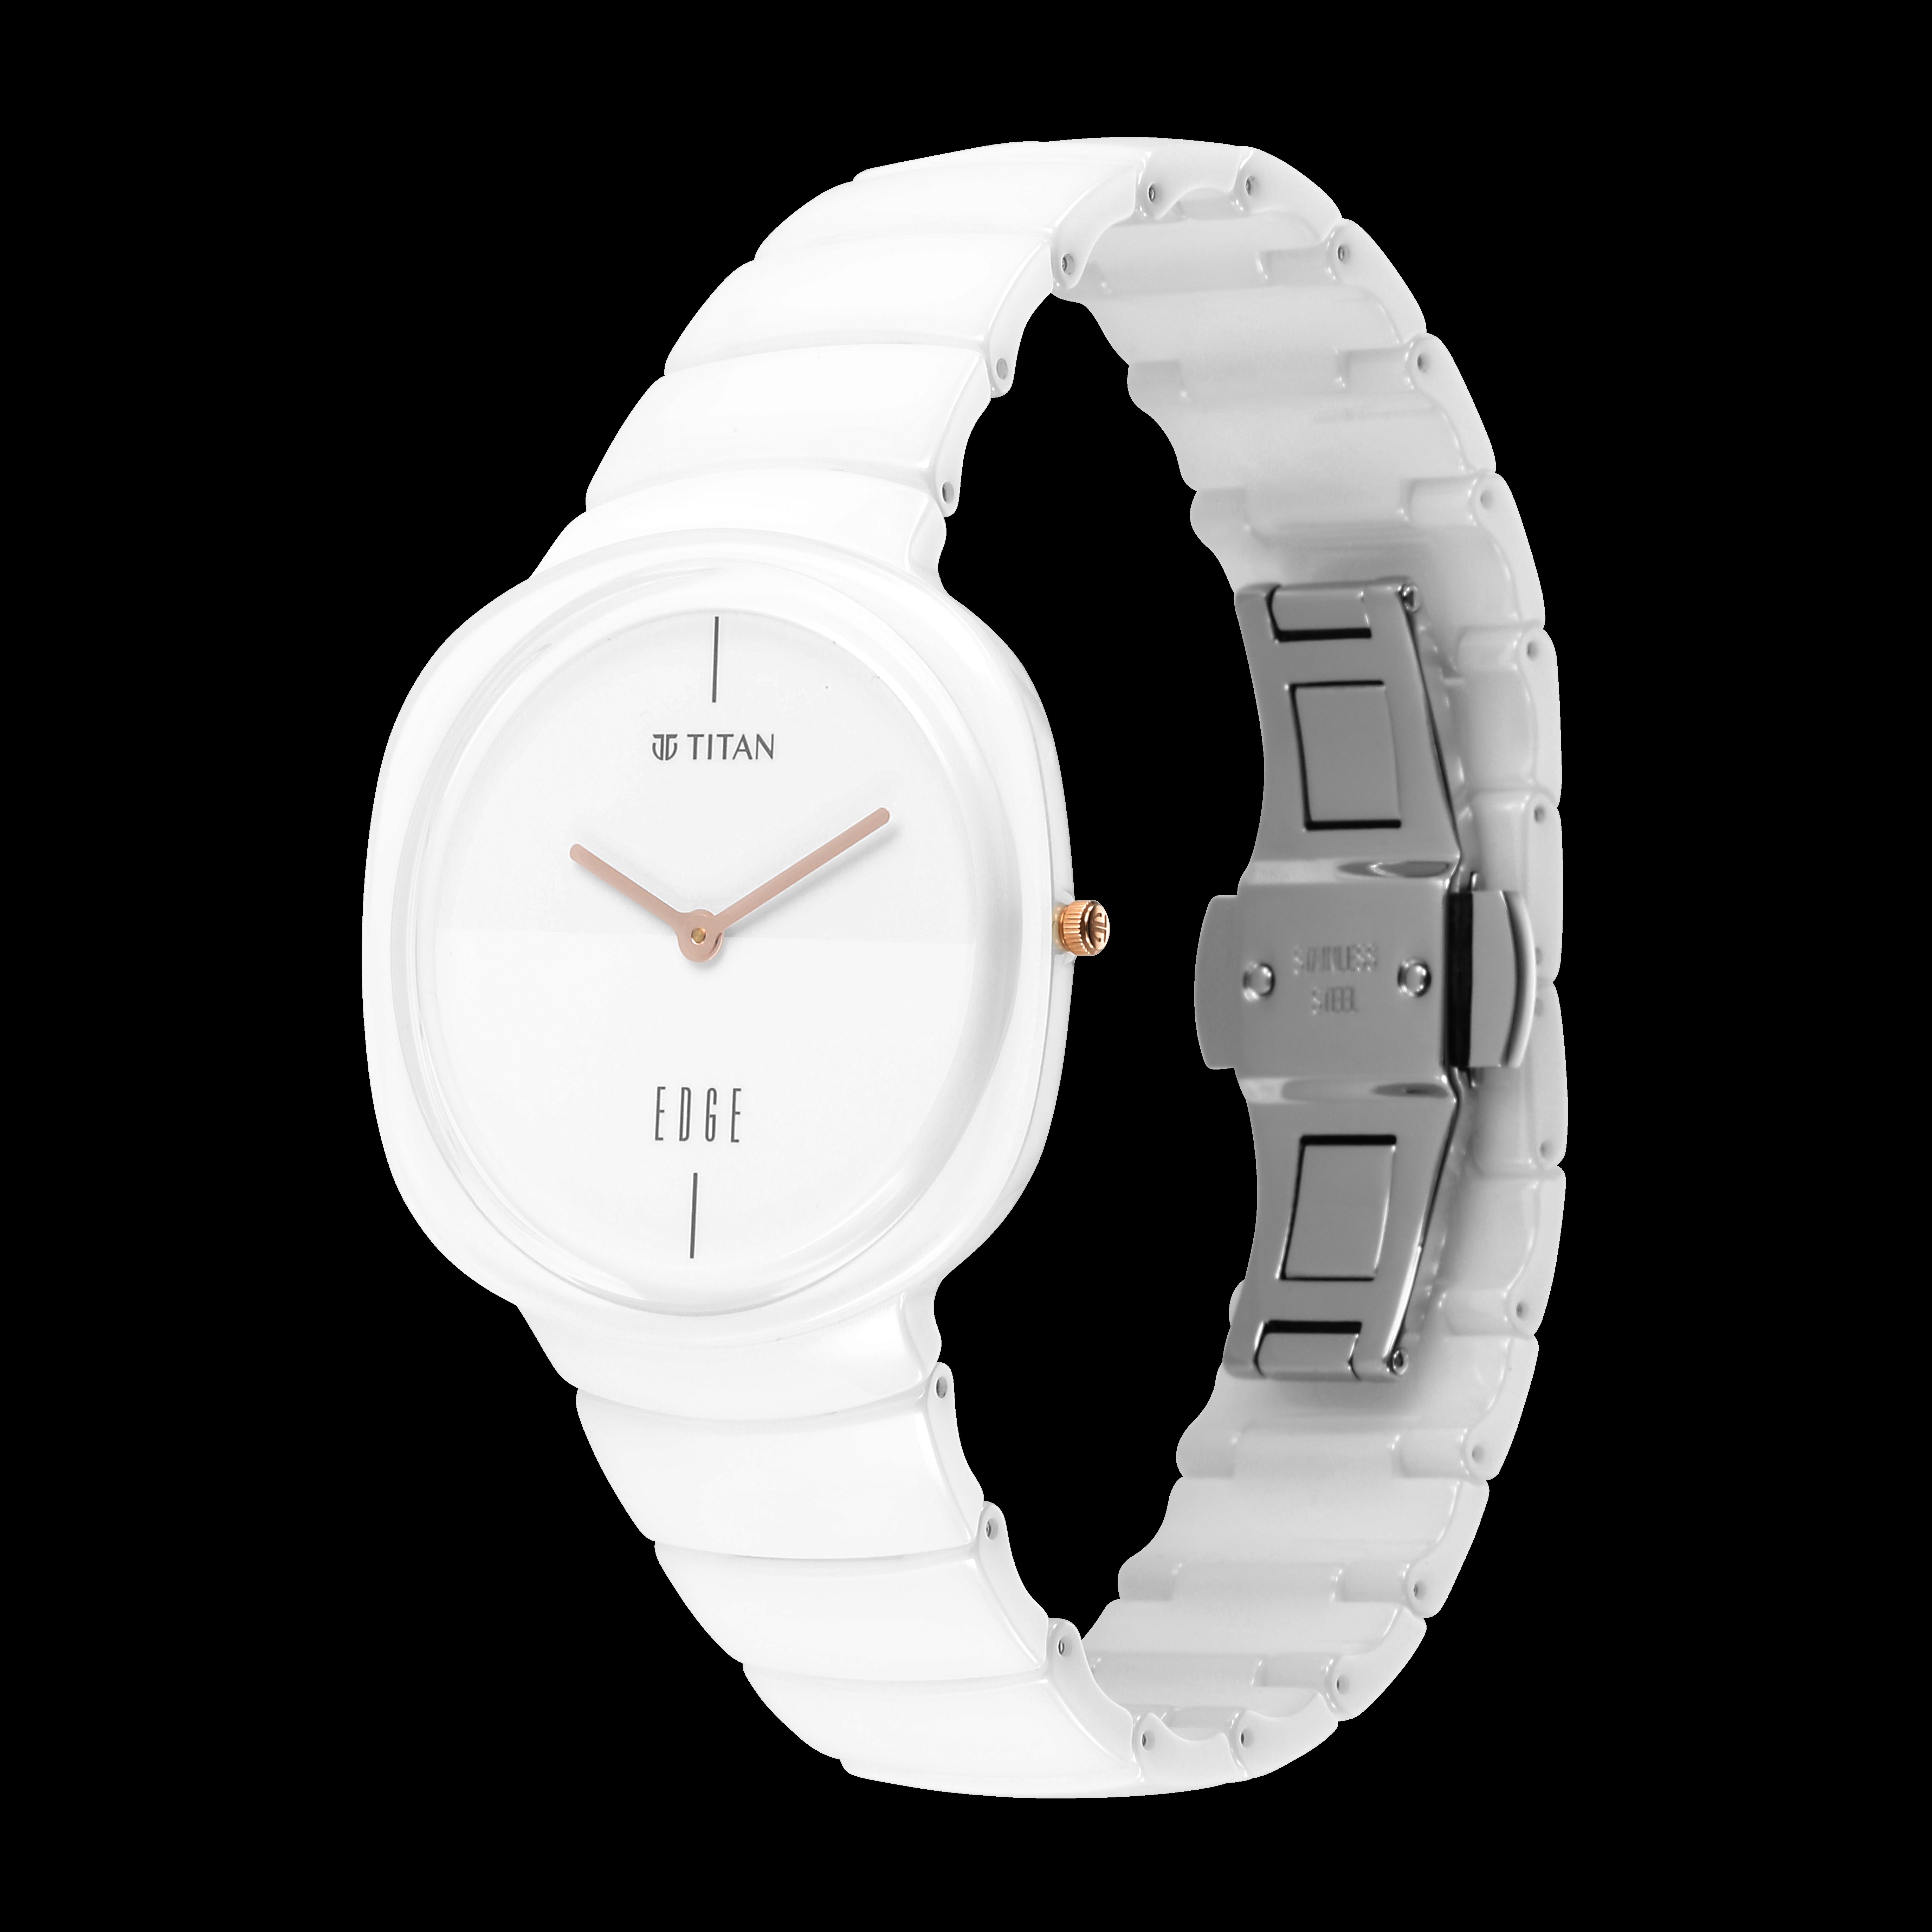 Titan introduces ‘Edge Squircle’ unisex watches under Edge Ceramic collection